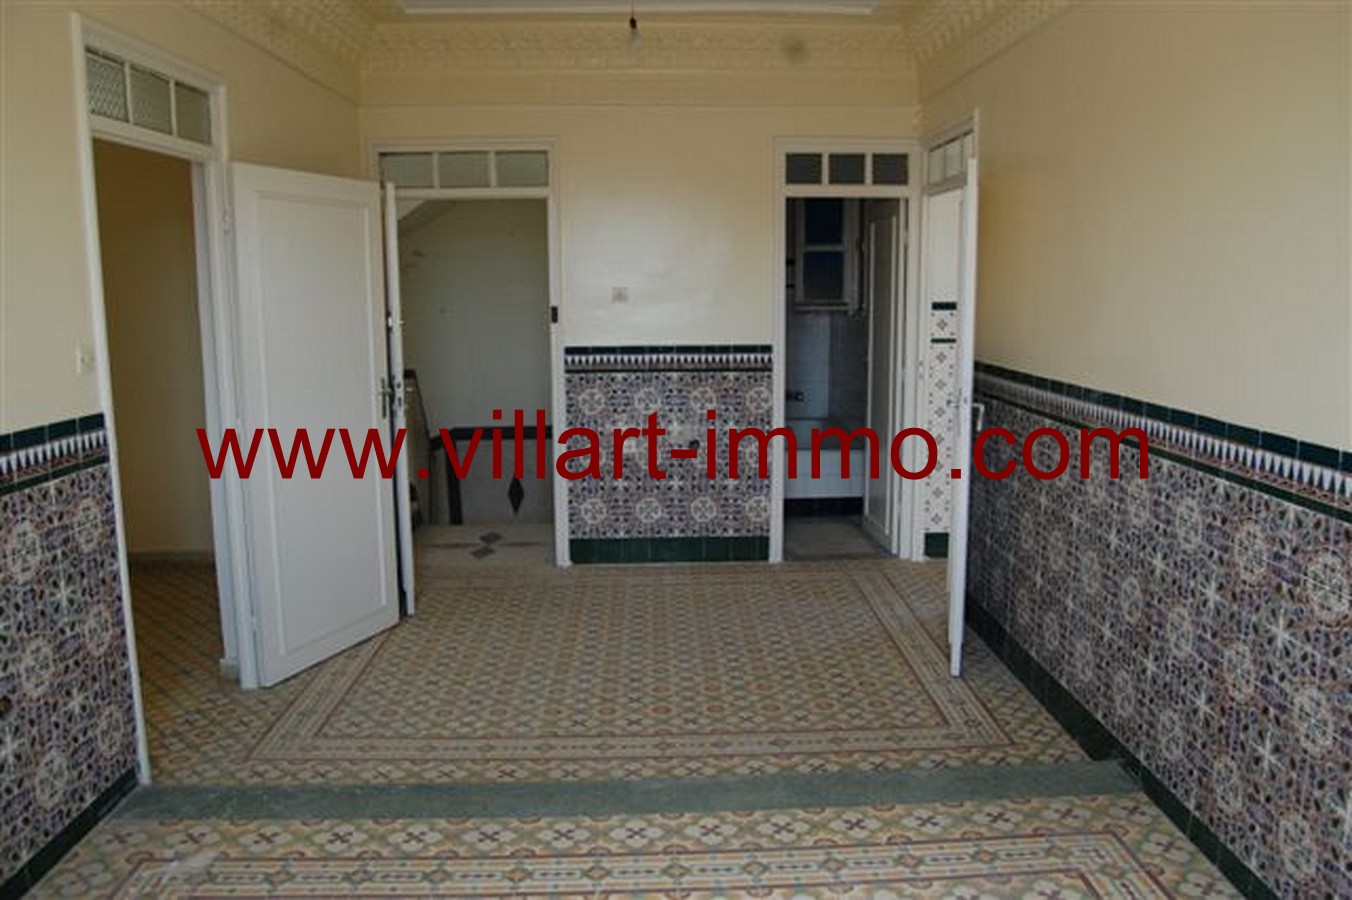 4-Vente-Appartement-Tanger-salon 2-VA532-Jirari-Villart Immo